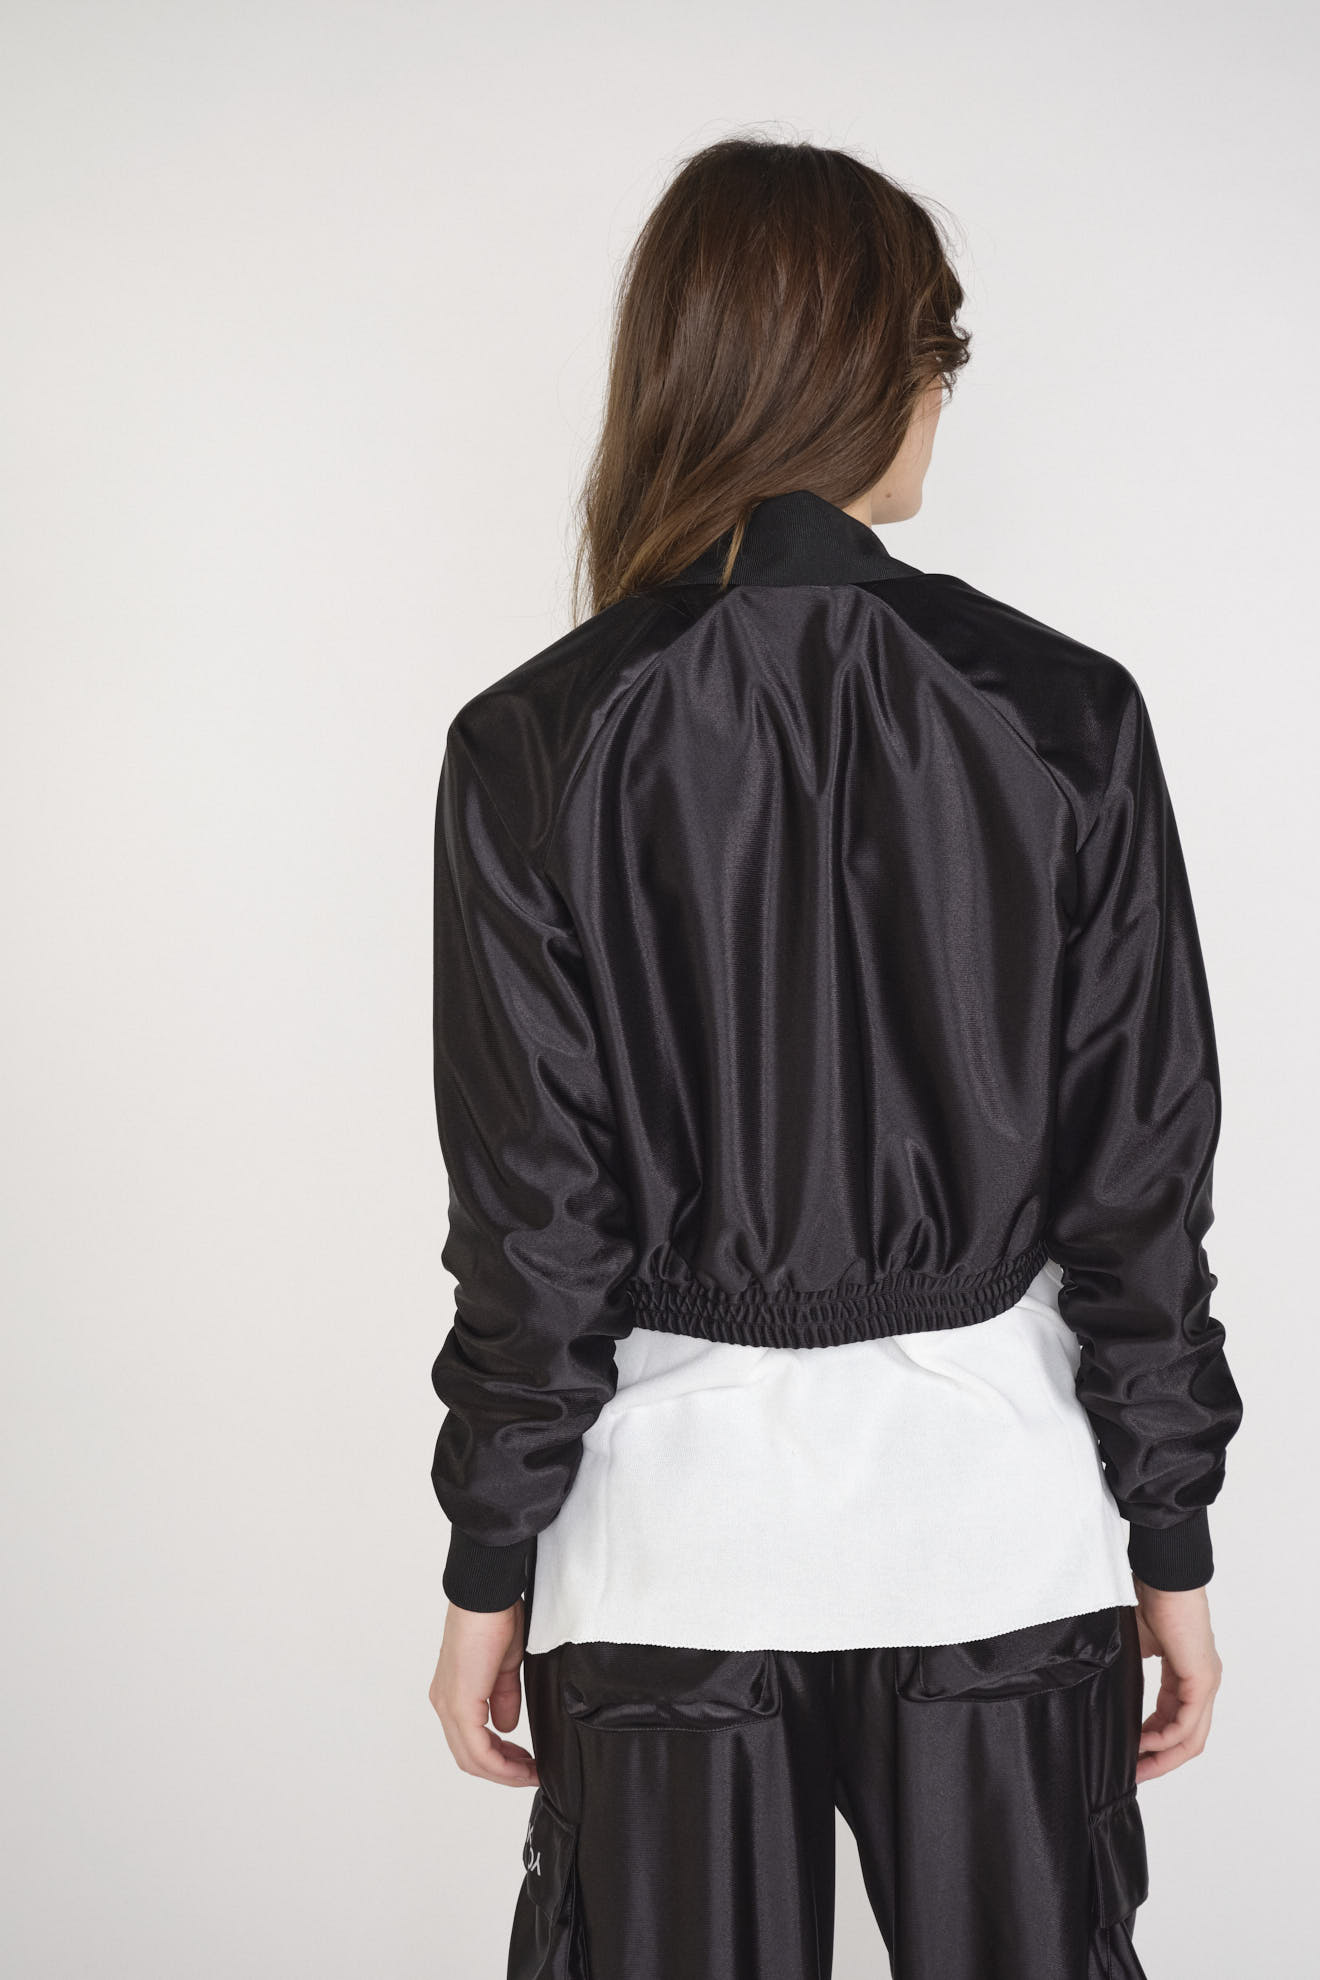 khrisjoy Track Jacket - Cropped jacket with zipper in satin look black